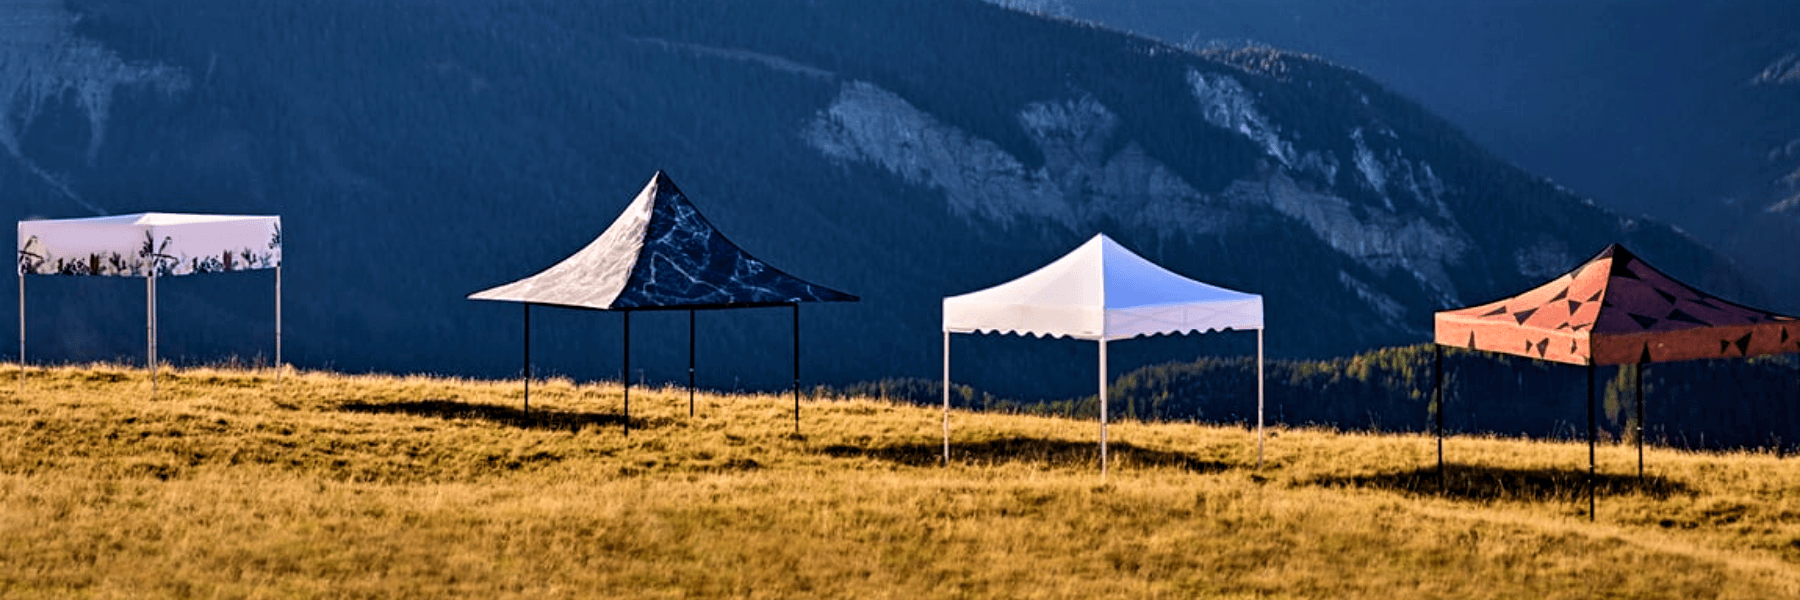 Outdoor showroom of Folding Tent Range including Cube Gazebo